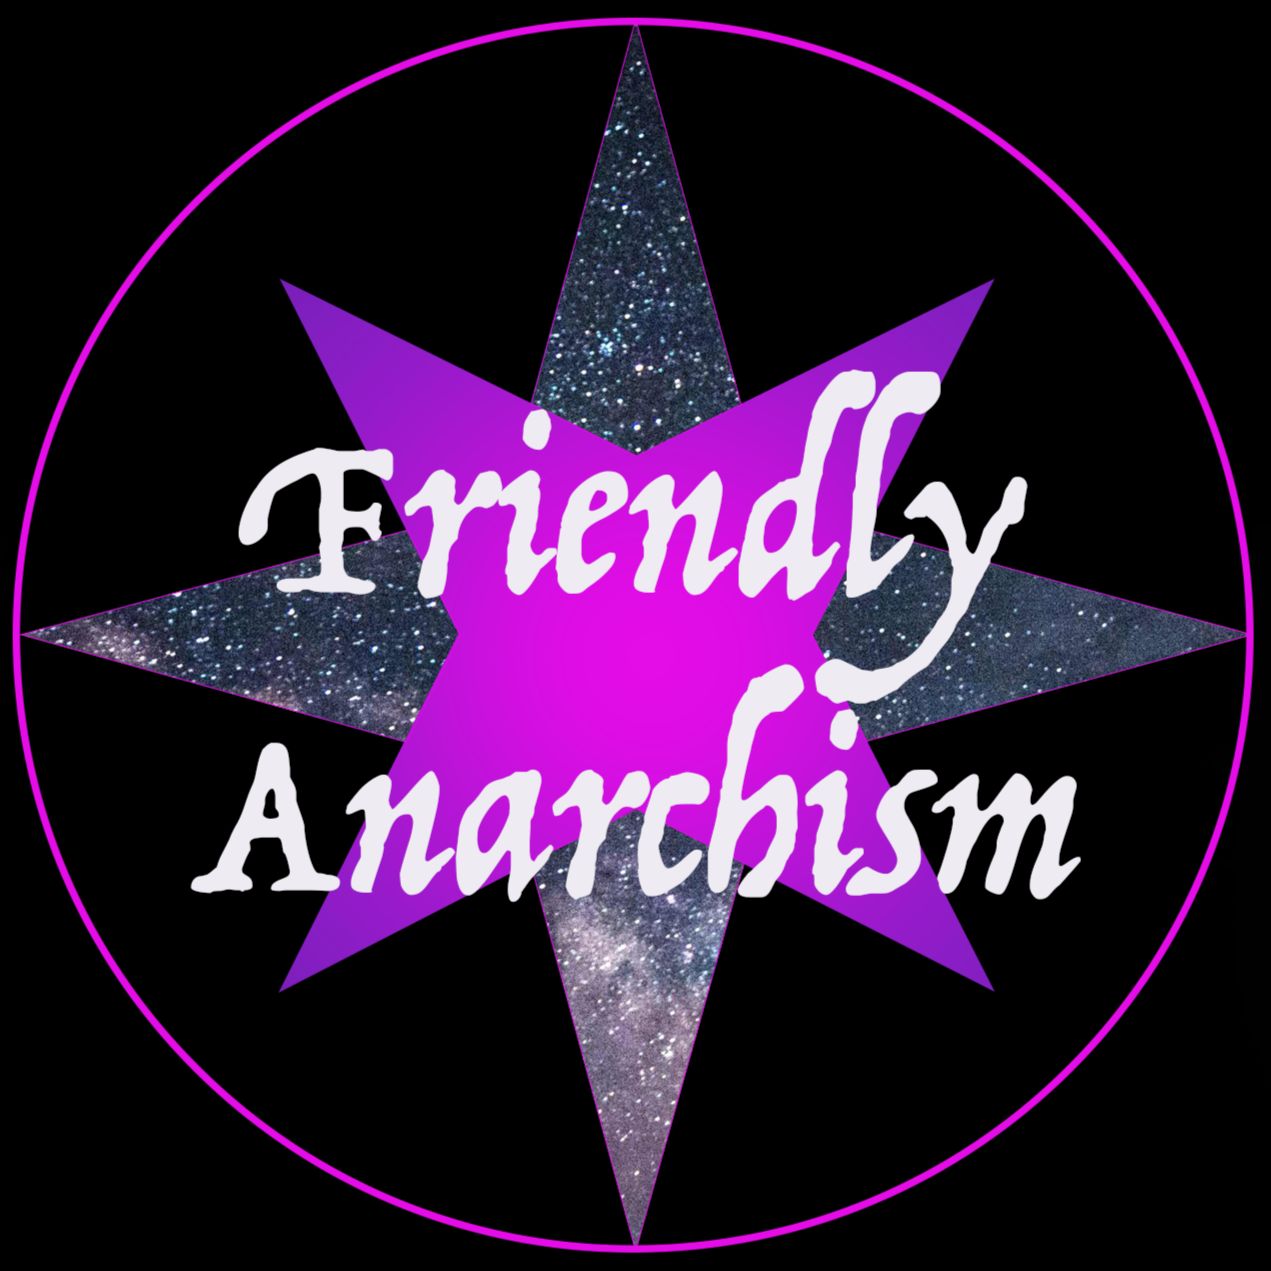 Friendly Anarchism